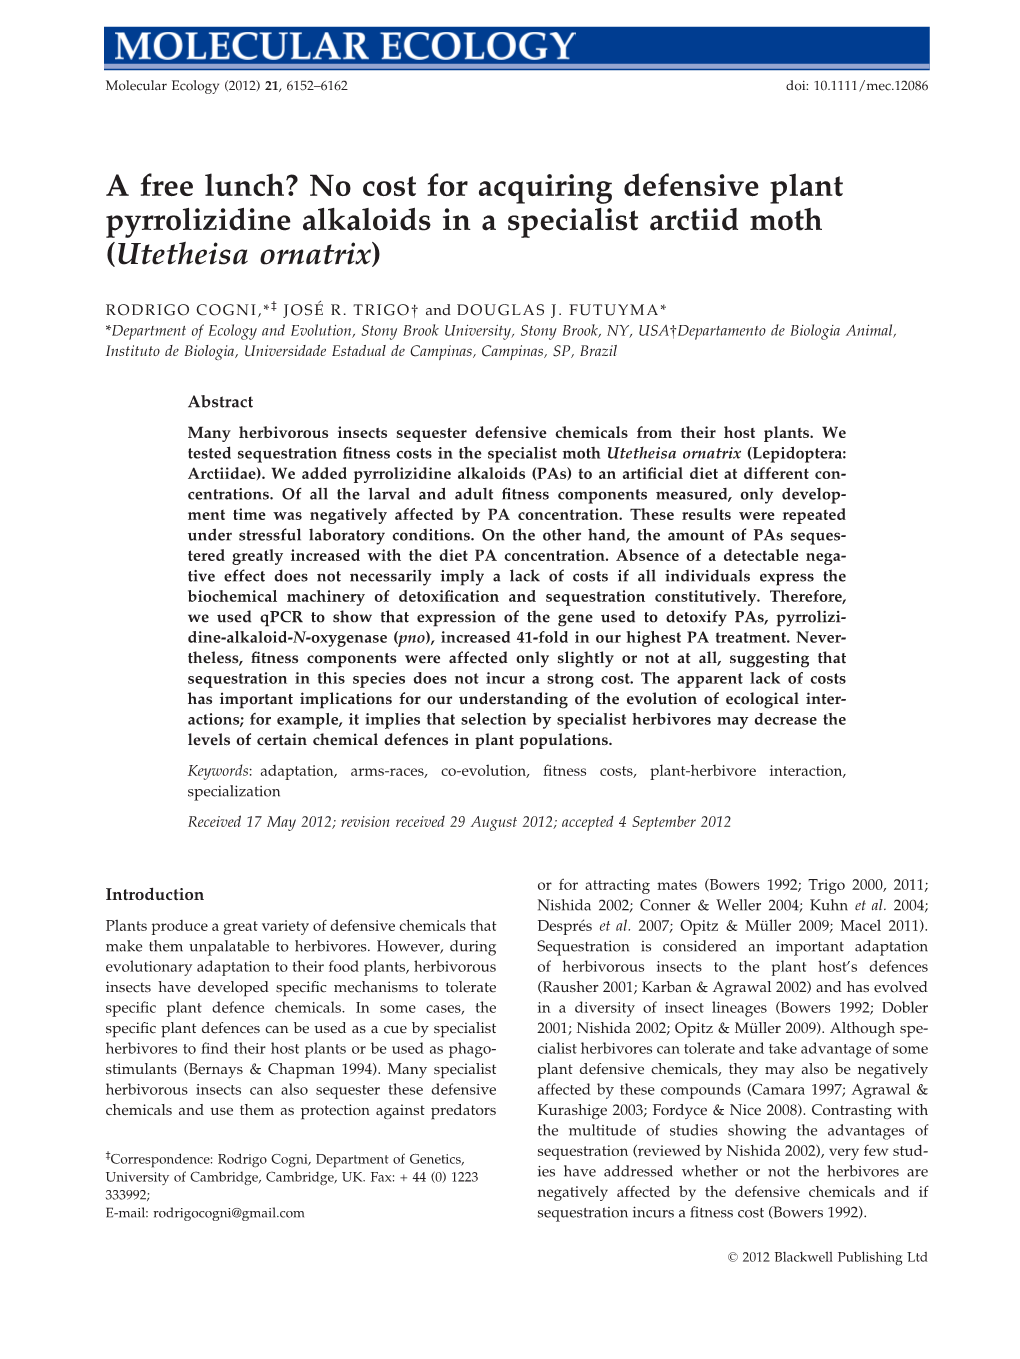 No Cost for Acquiring Defensive Plant Pyrrolizidine Alkaloids in a Specialist Arctiid Moth (Utetheisa Ornatrix)